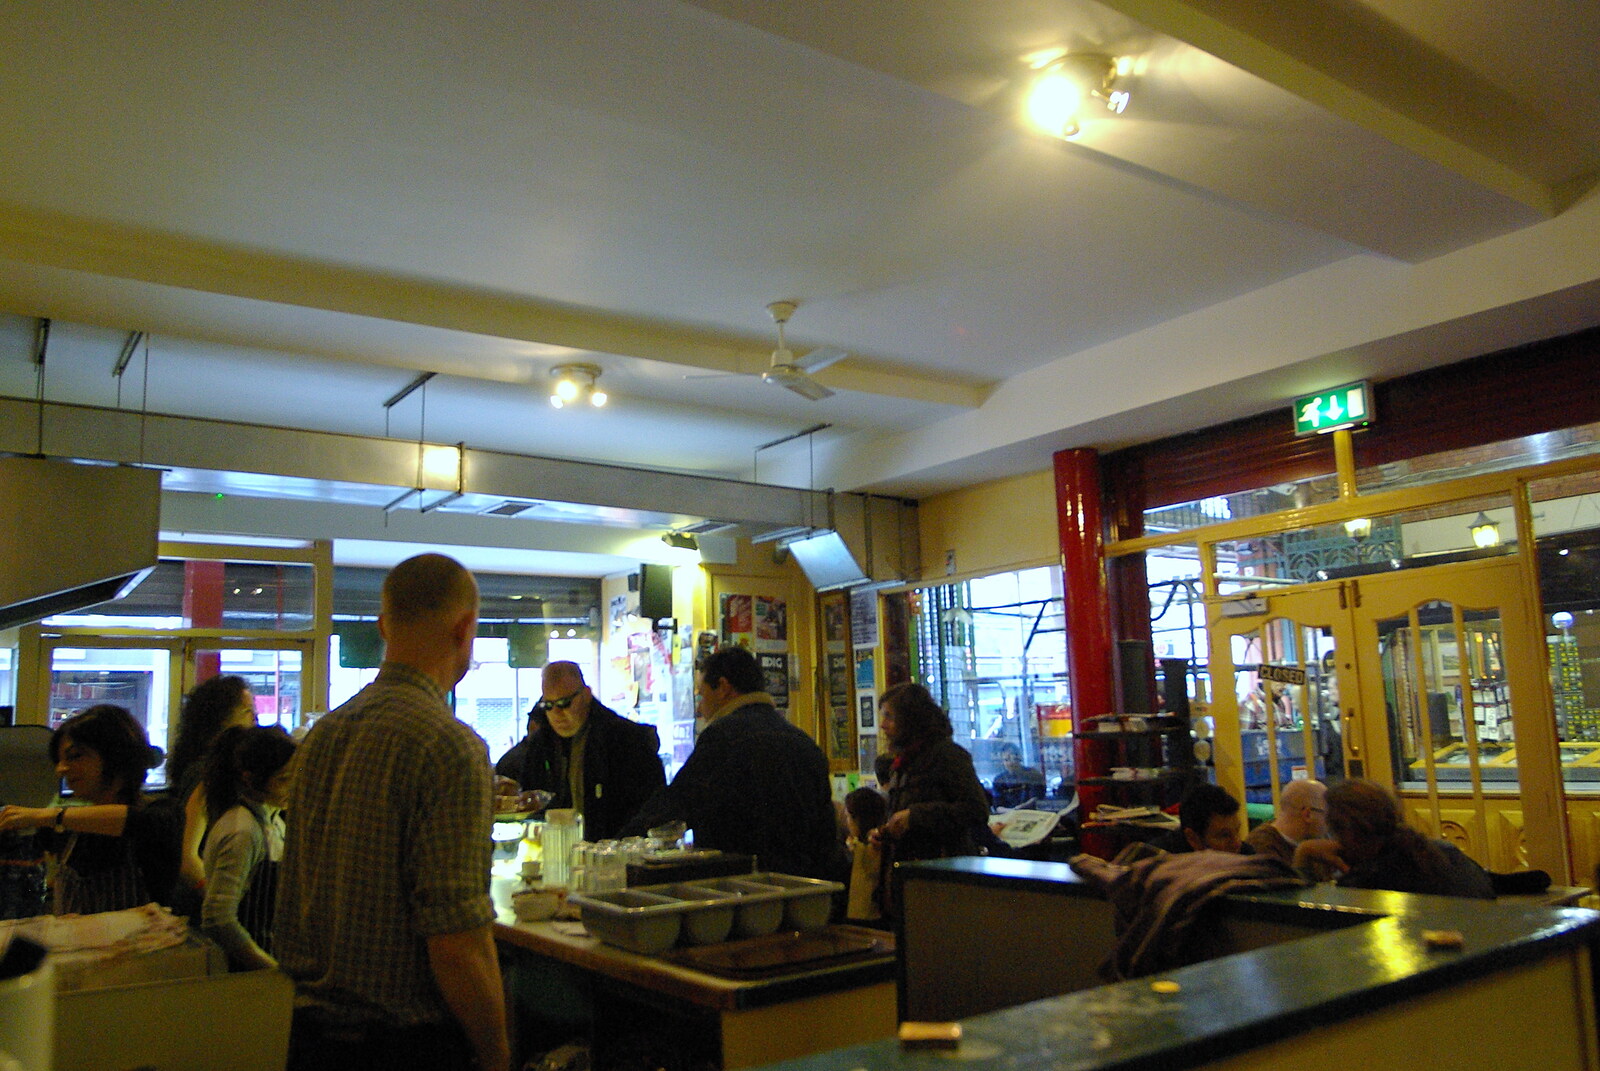 Easter in Dublin, Ireland - 21st March 2008: Inside Simon's Café